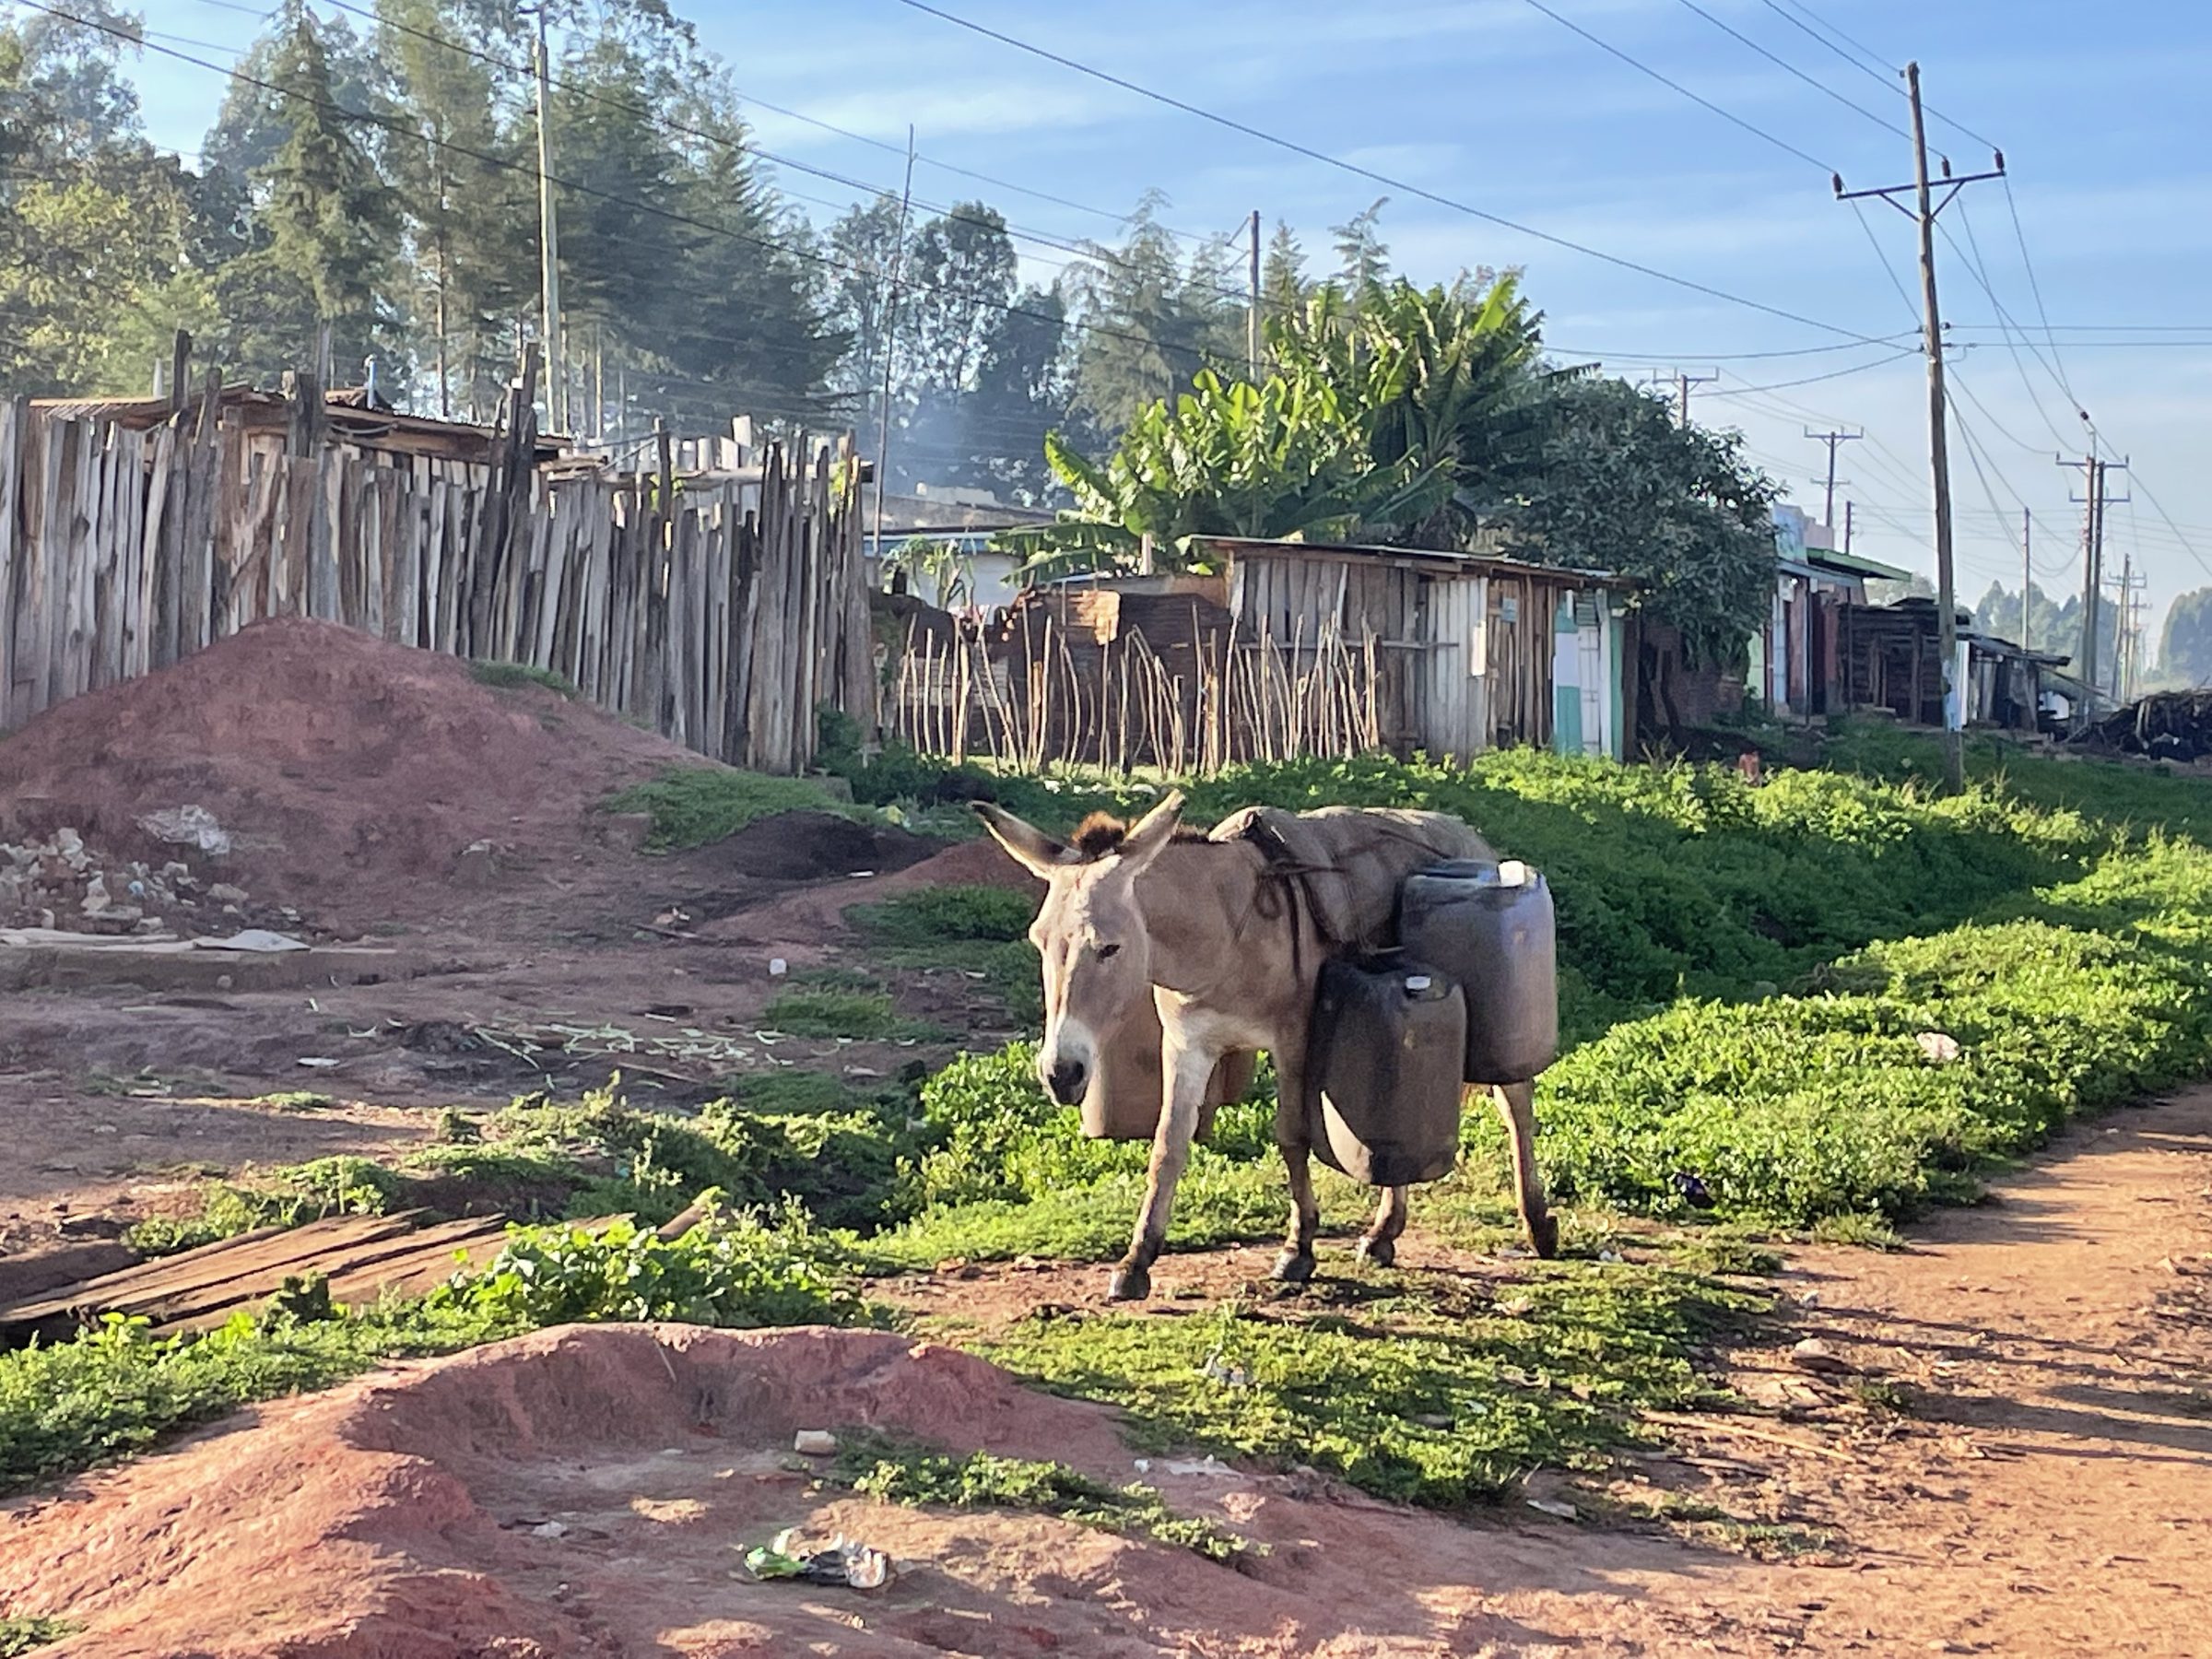 A donkey in Kenya carries water | Roadtrip Africa